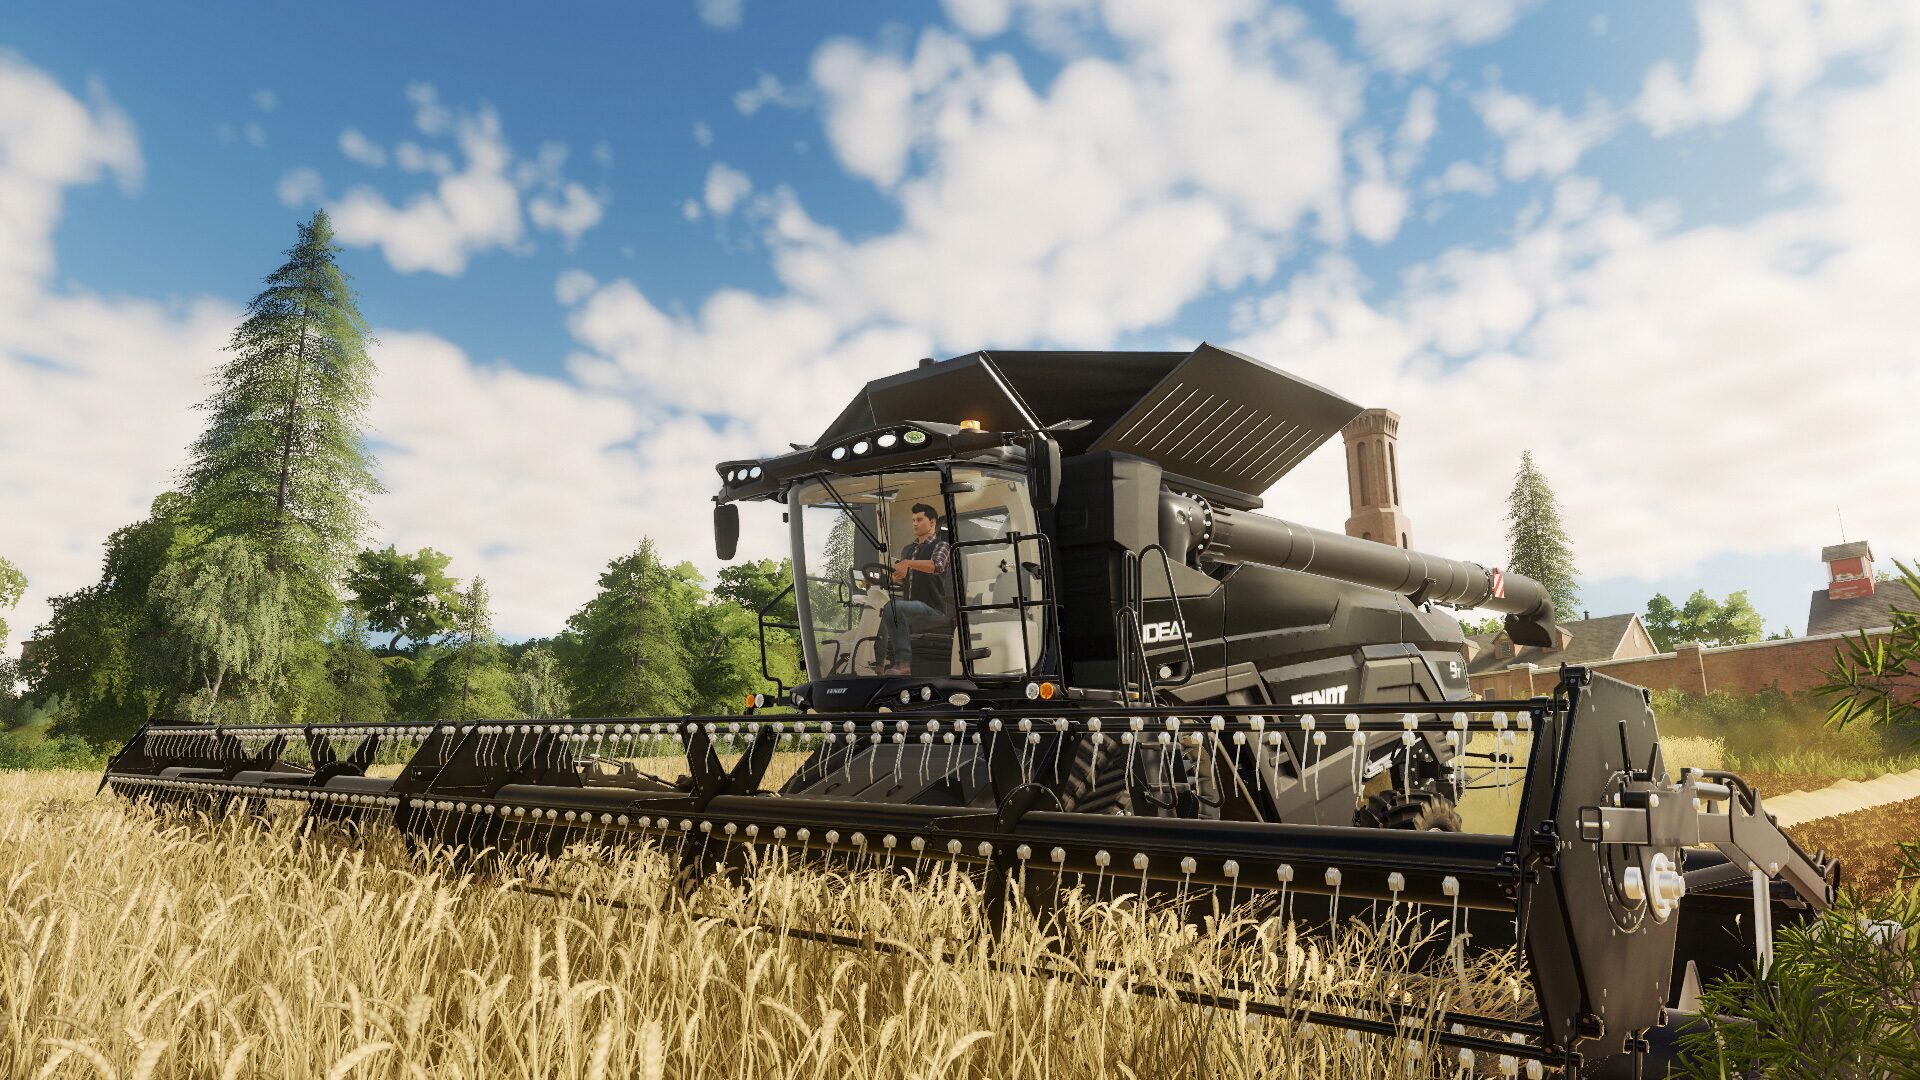 farming simulator 19 psn